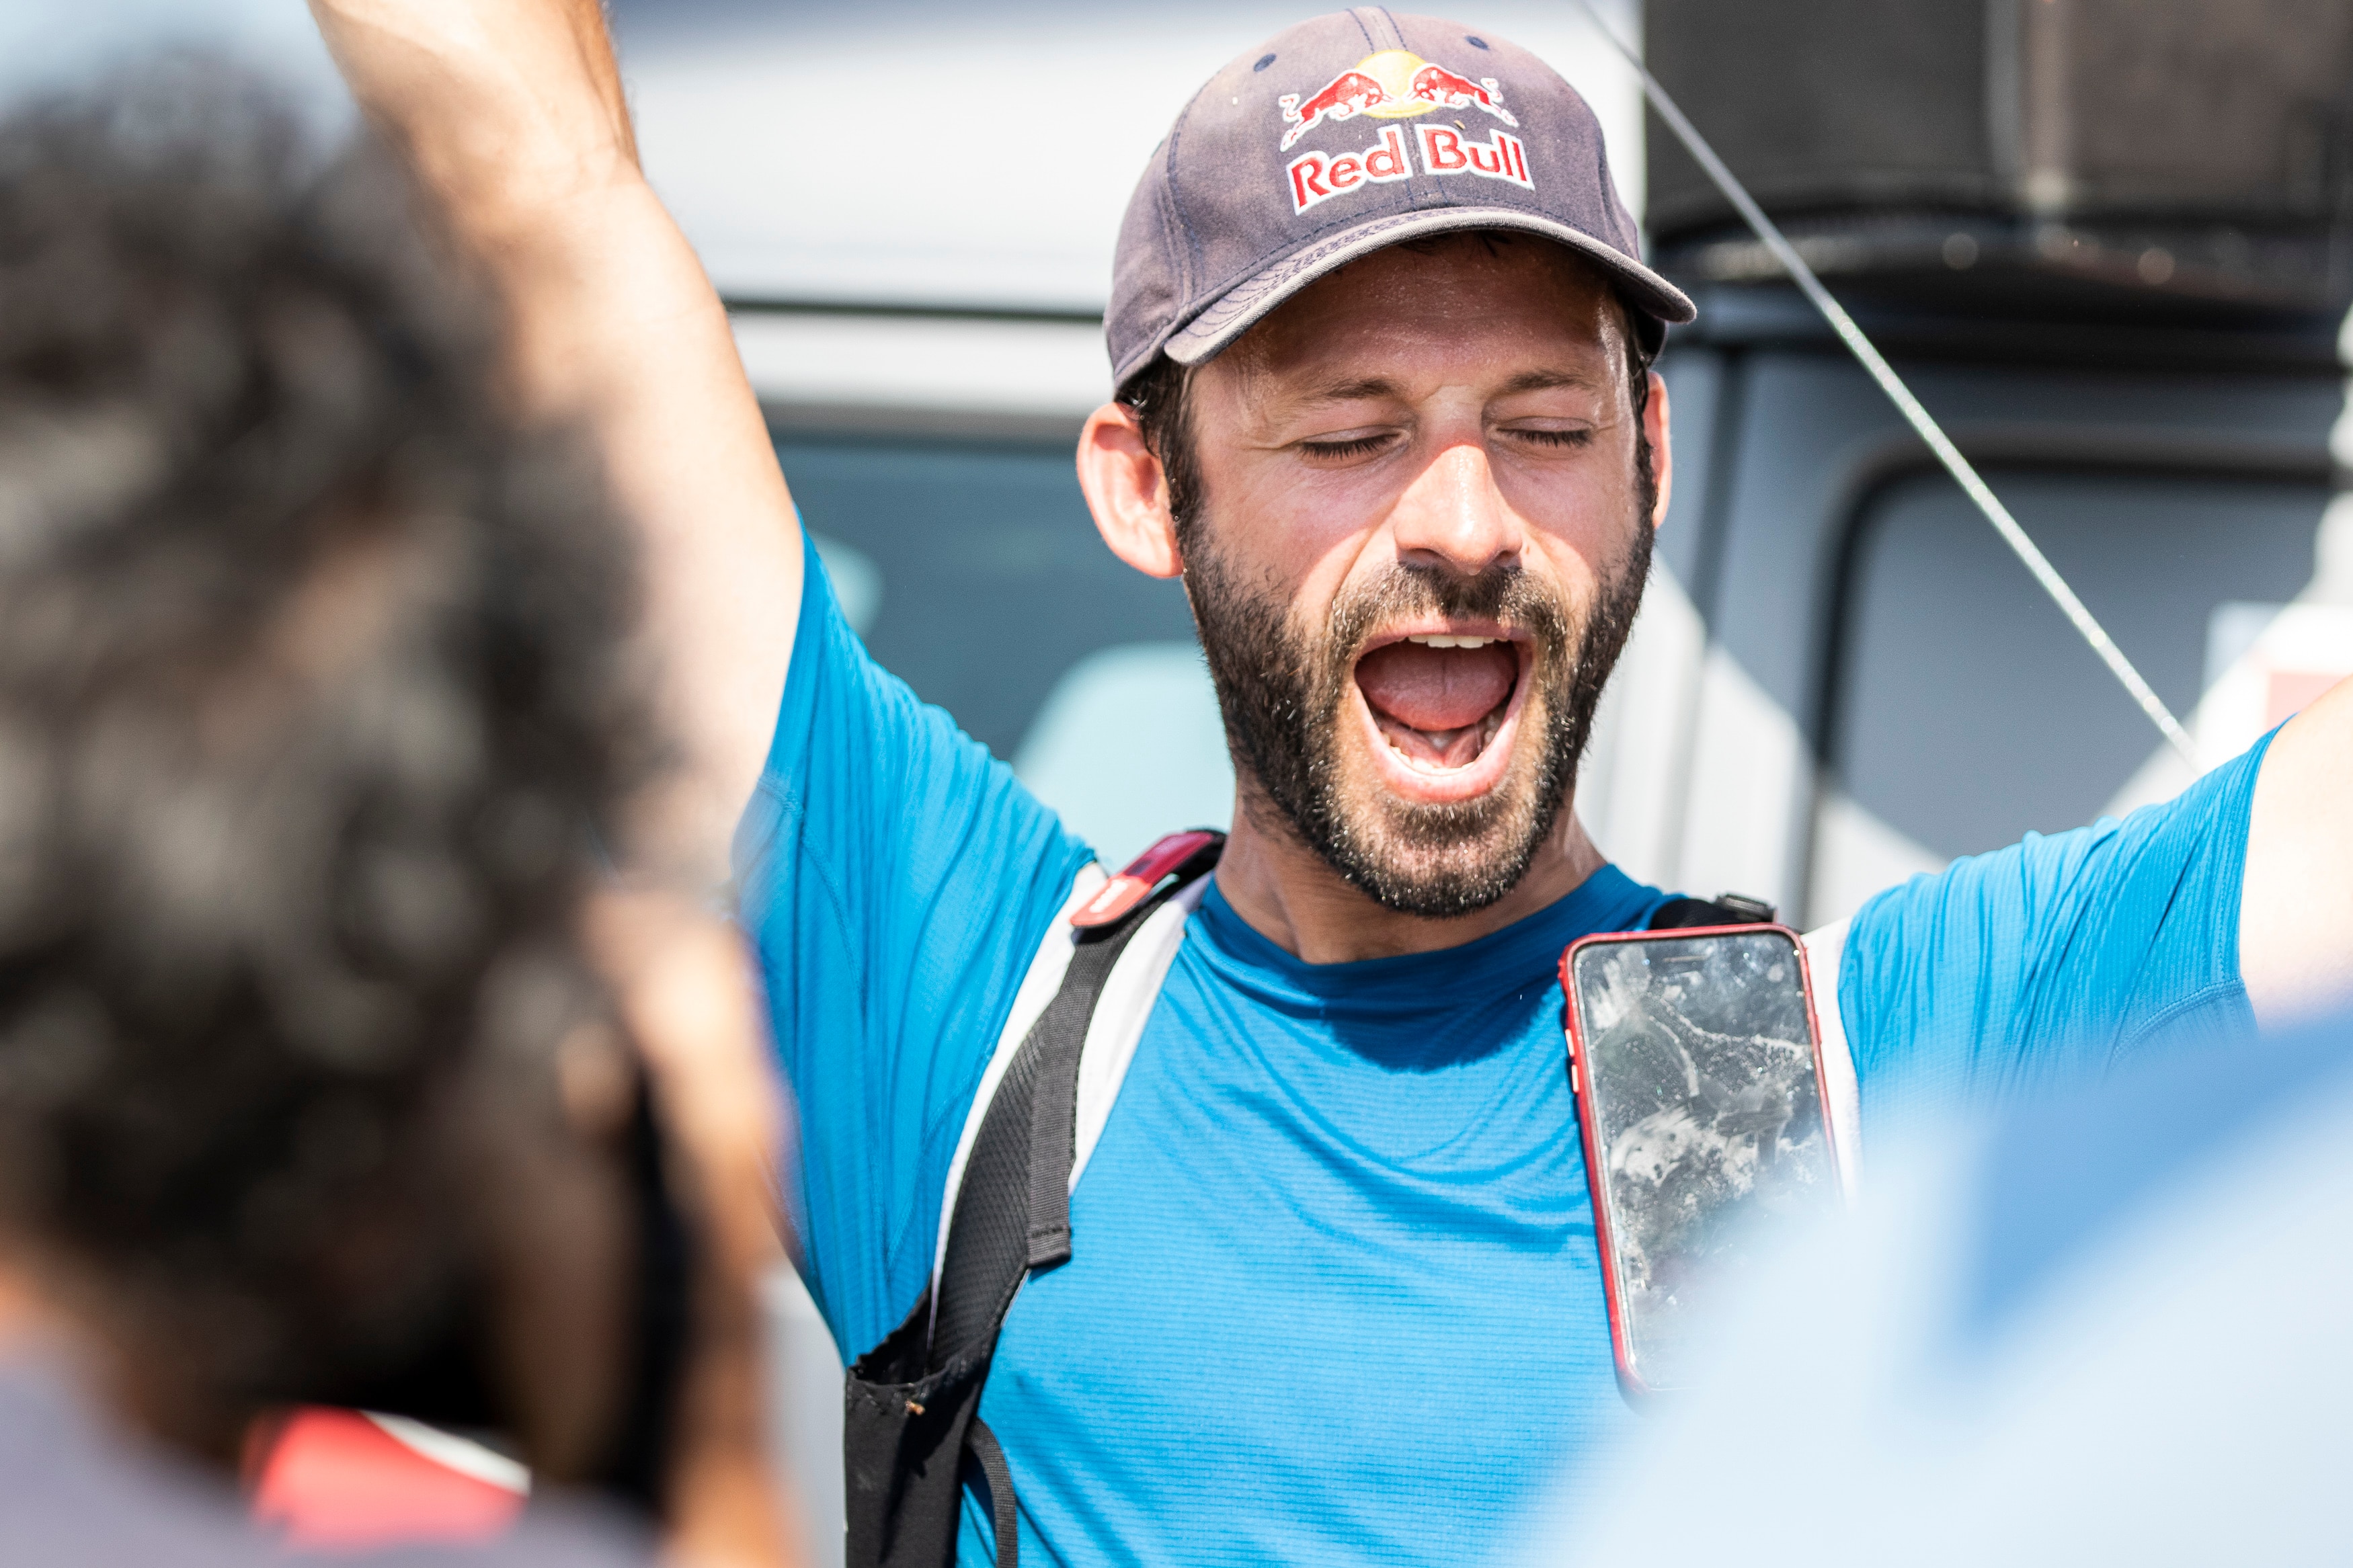 Tom De Dorlodot (BEL) celebrates during the Red Bull X-Alps in Peille, France on June 27, 2019